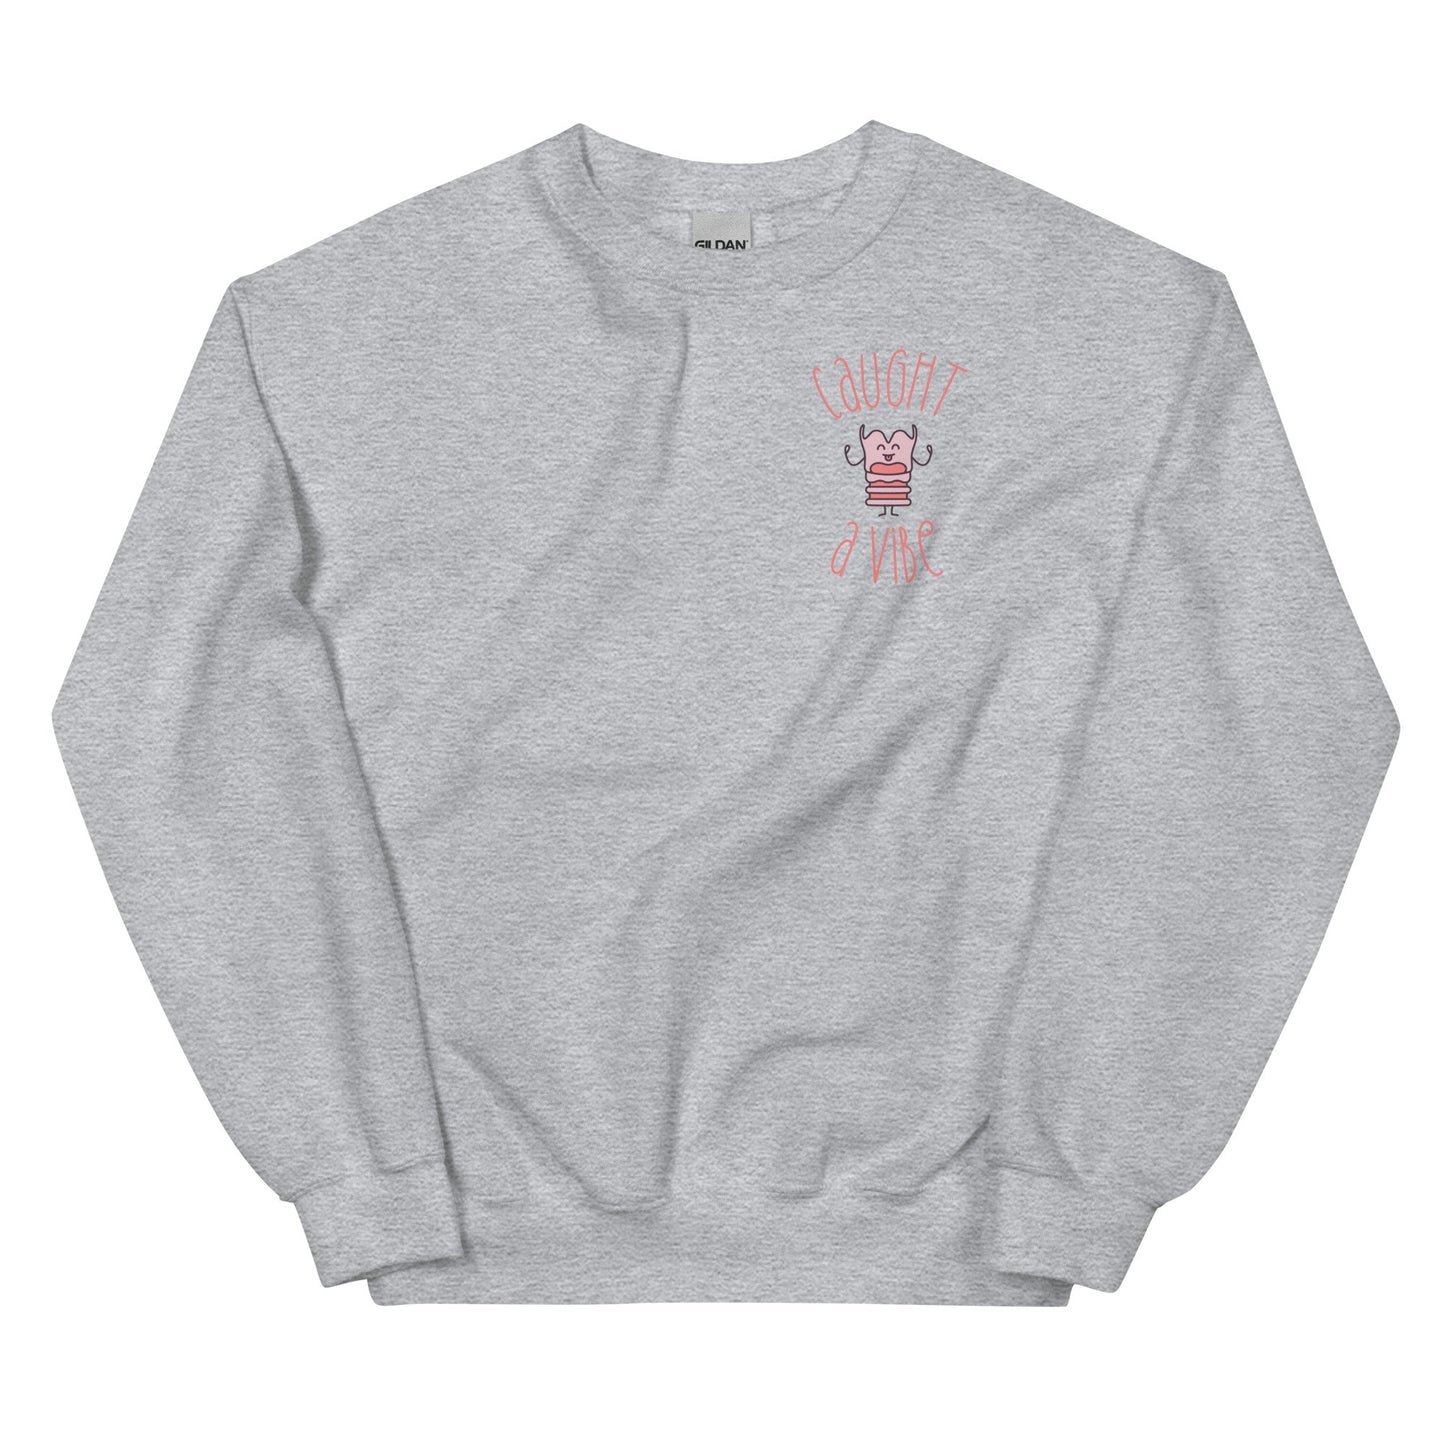 unisex-crew-neck-sweatshirt-sport-grey-front-63084ecd6f538.jpg